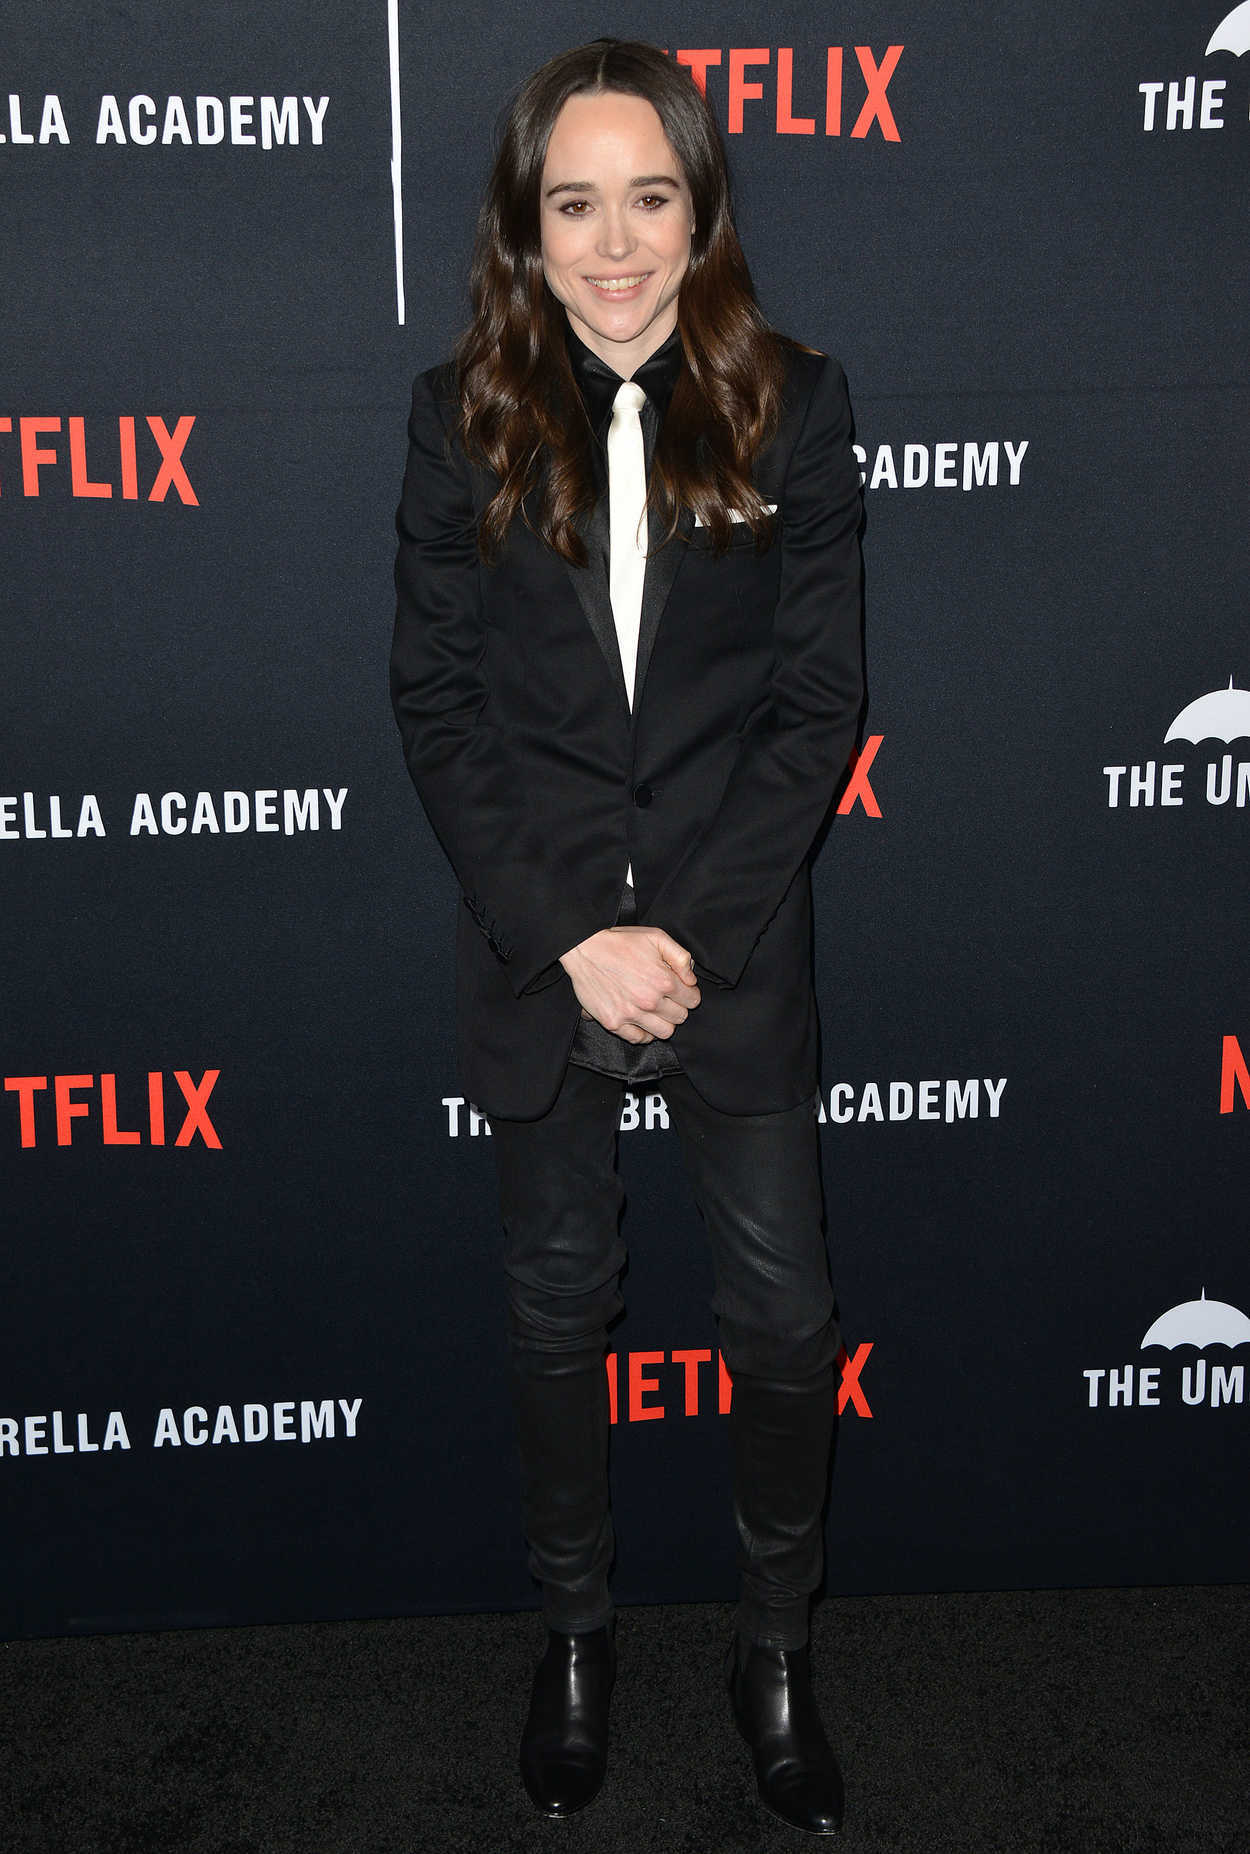 Ellen Page Attends The Umbrella Academy TV Show Premiere in LA 02/12 ...